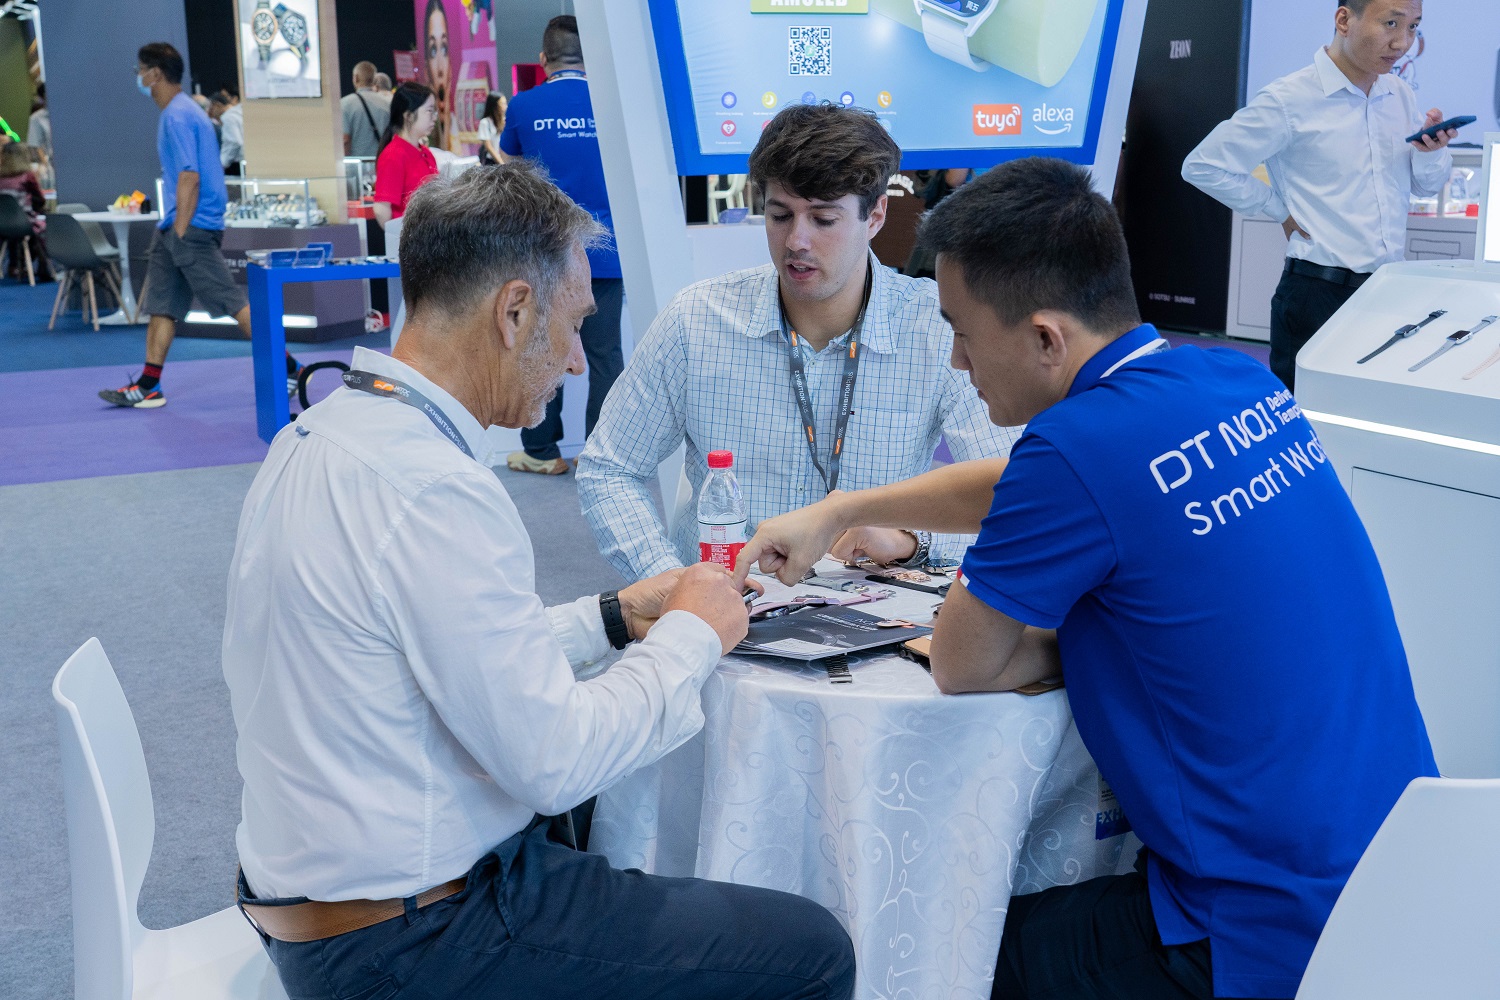 DTNO.1 in HKTDC HongKong Watch & Clock Fair 2023